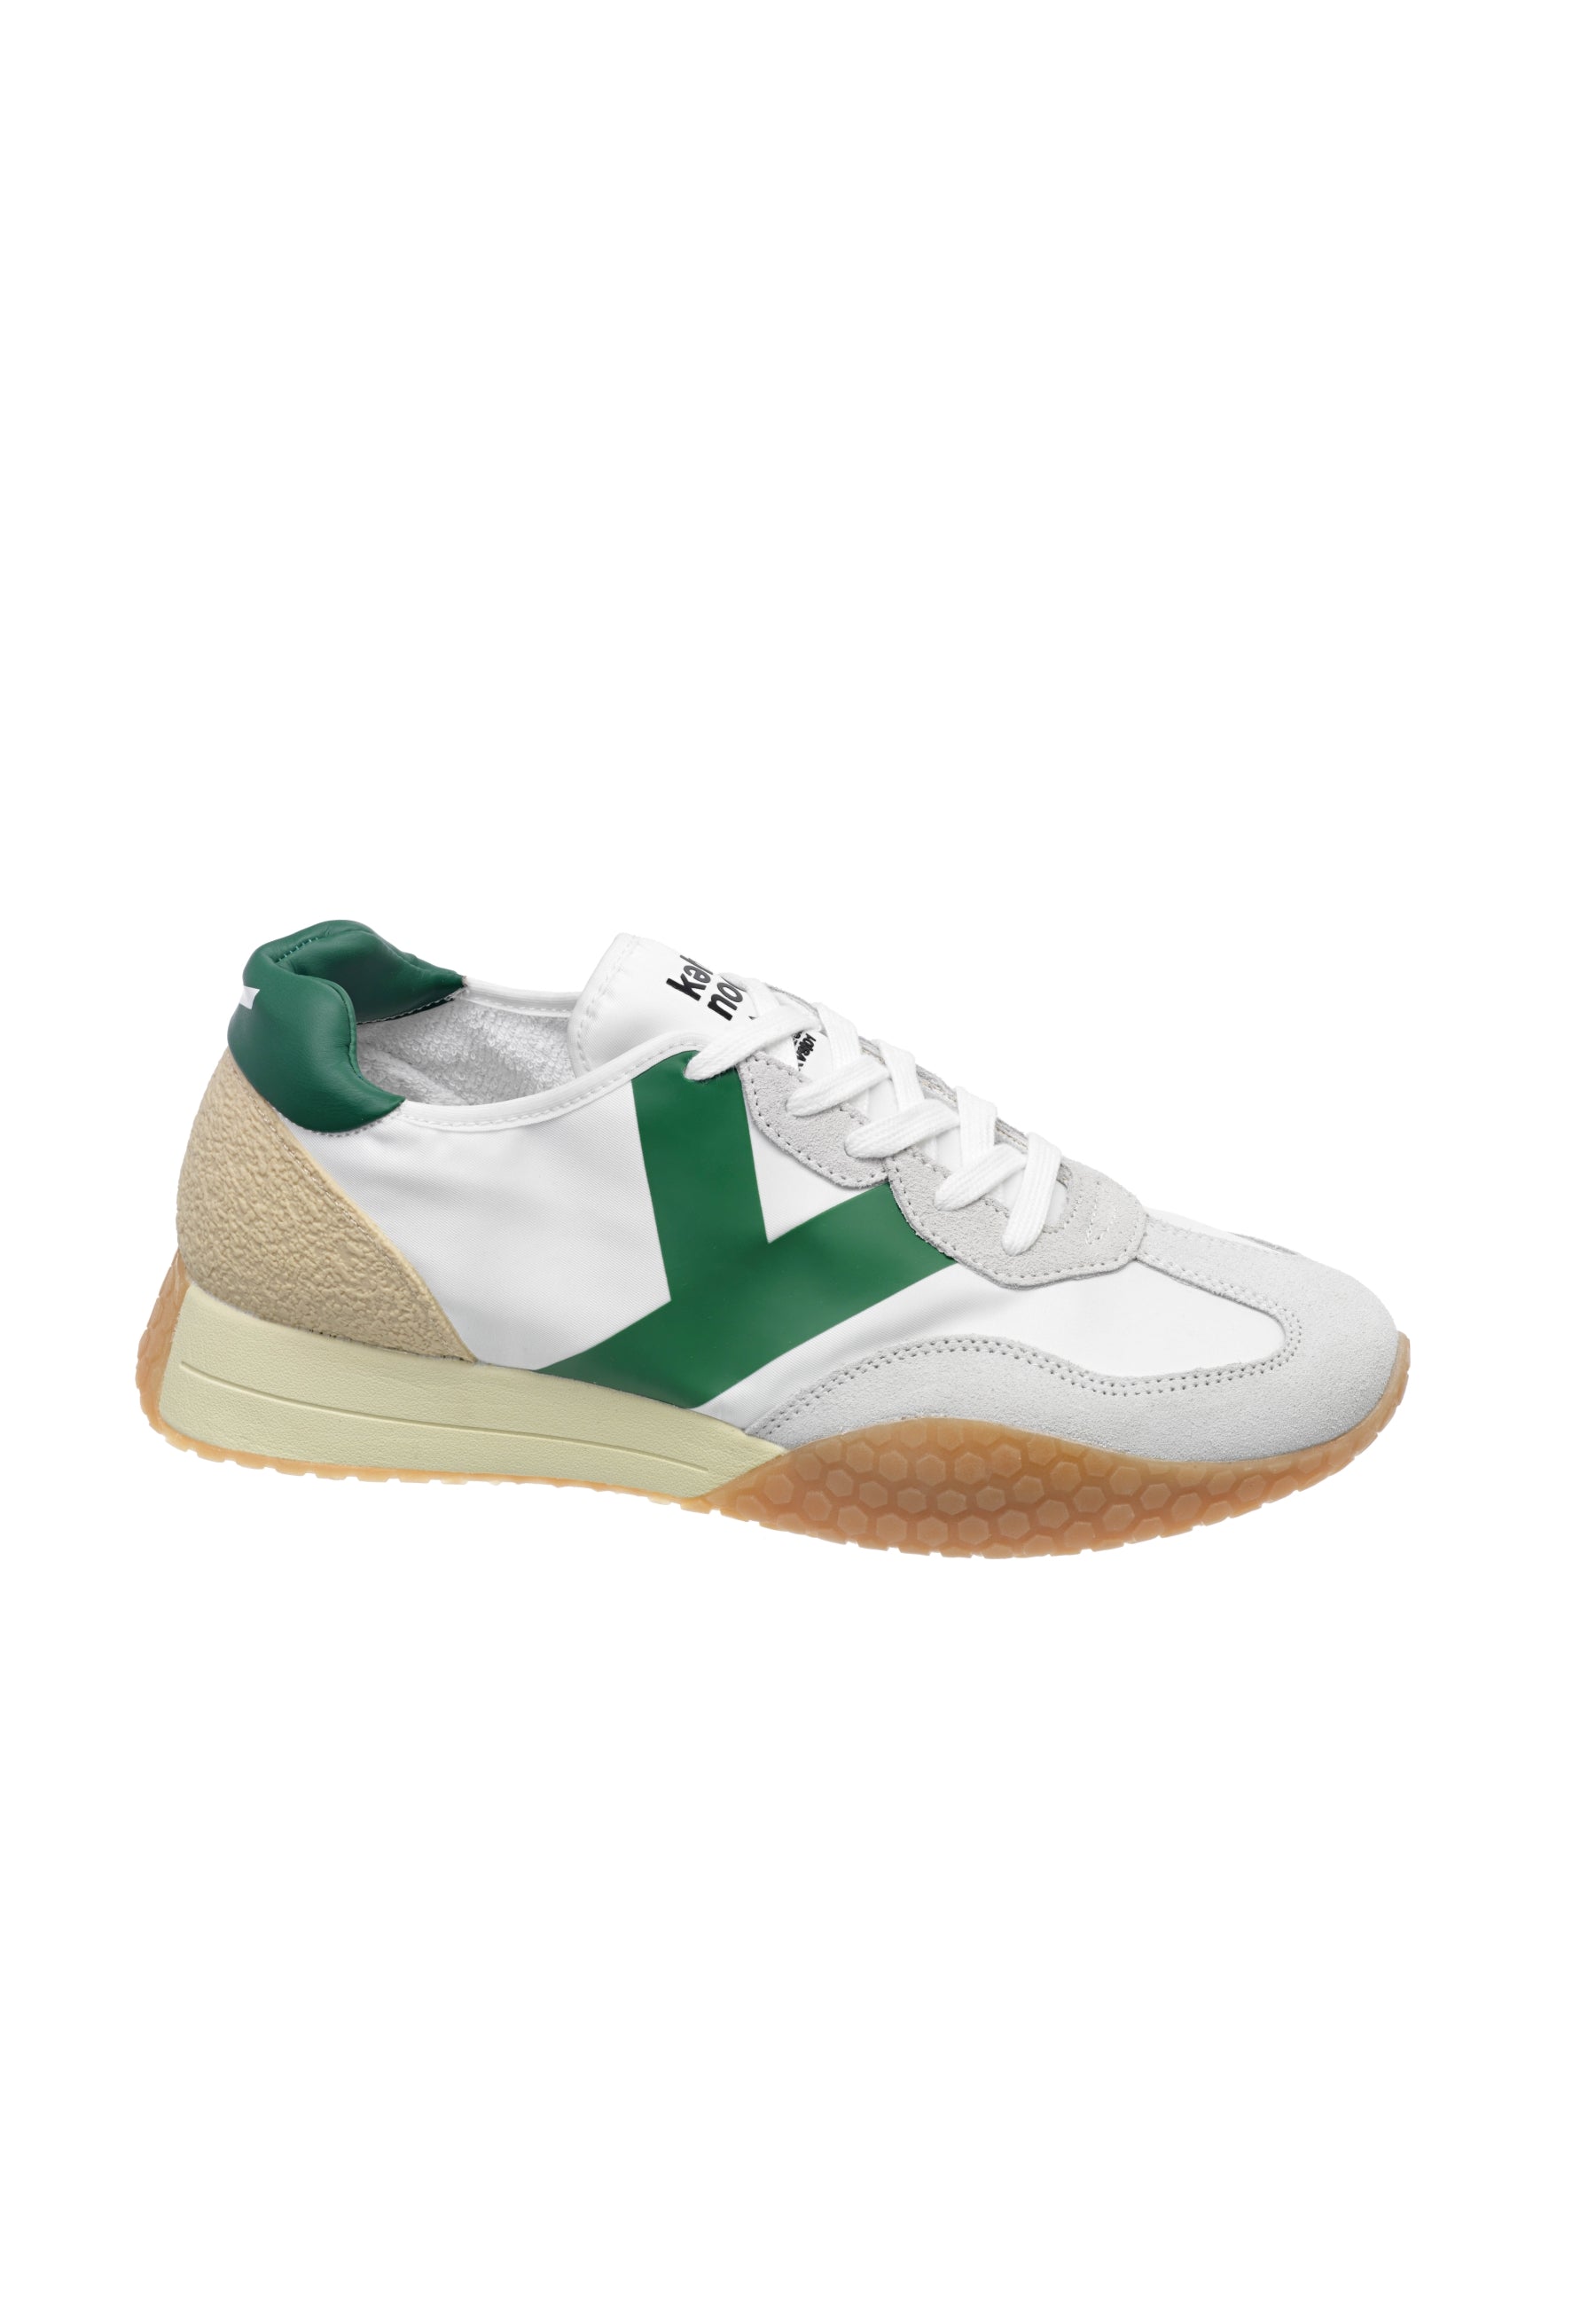 Ambassador in White/Green Sneakers Keh-Noo   